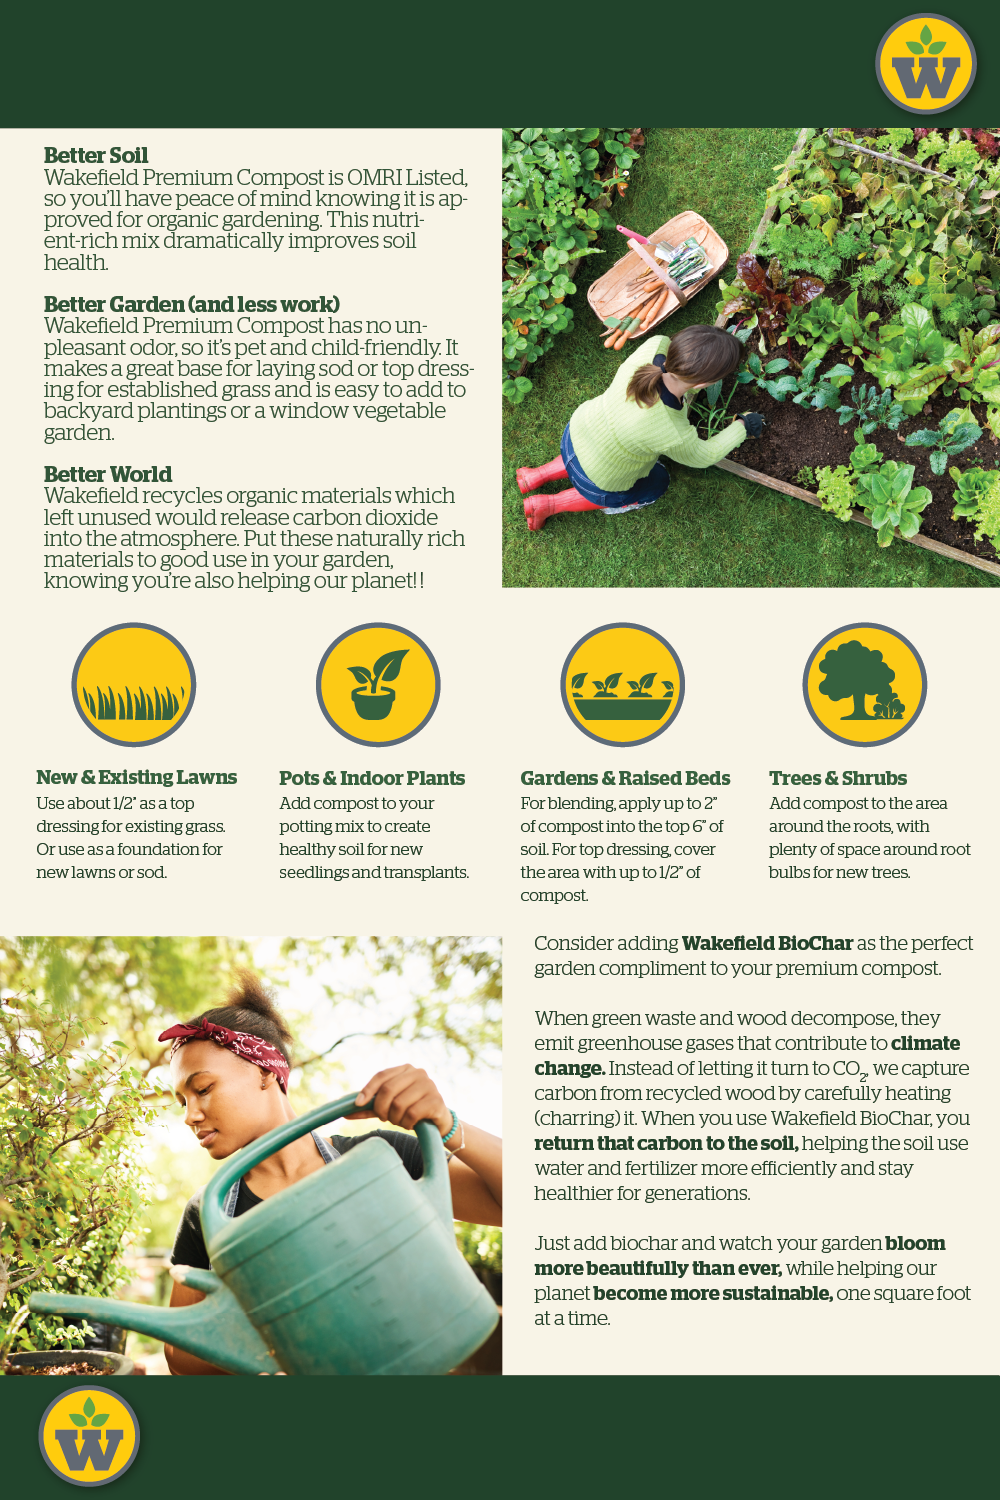 Wakefield BioChar Garden Premium Compost for Healthier Soil 1 Cubic Feet Bag - image 3 of 5